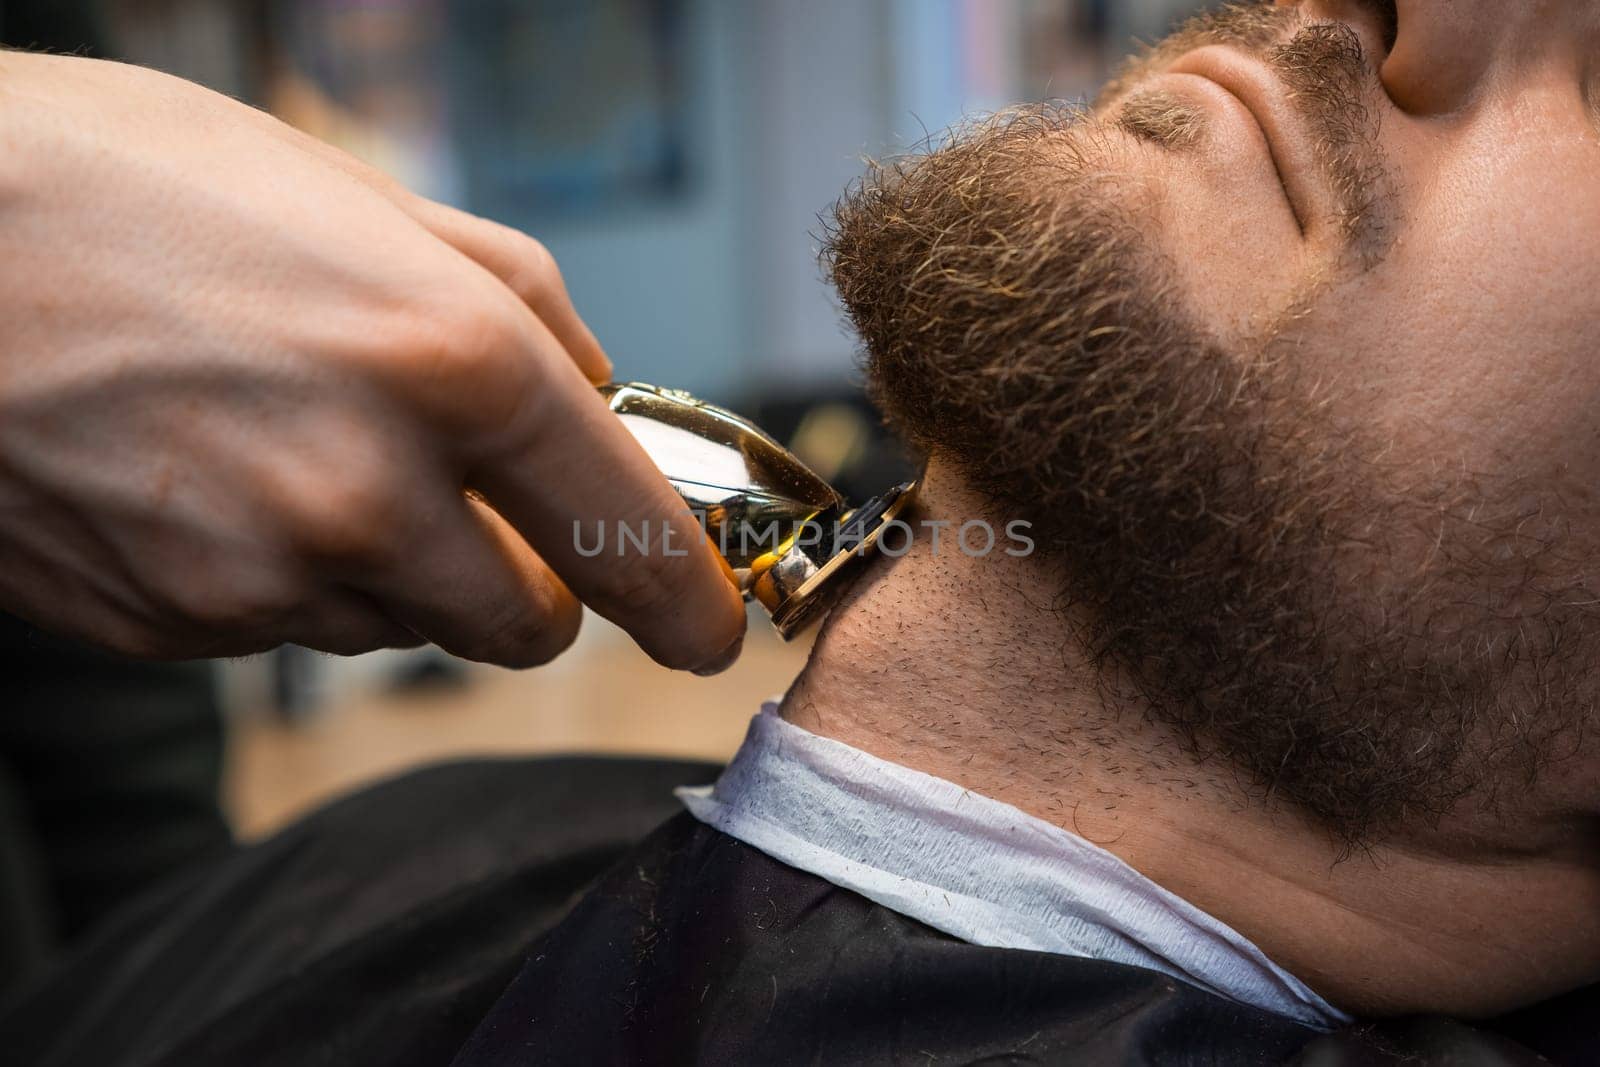 Stylist cuts hair on neck creating beard shape for man by vladimka